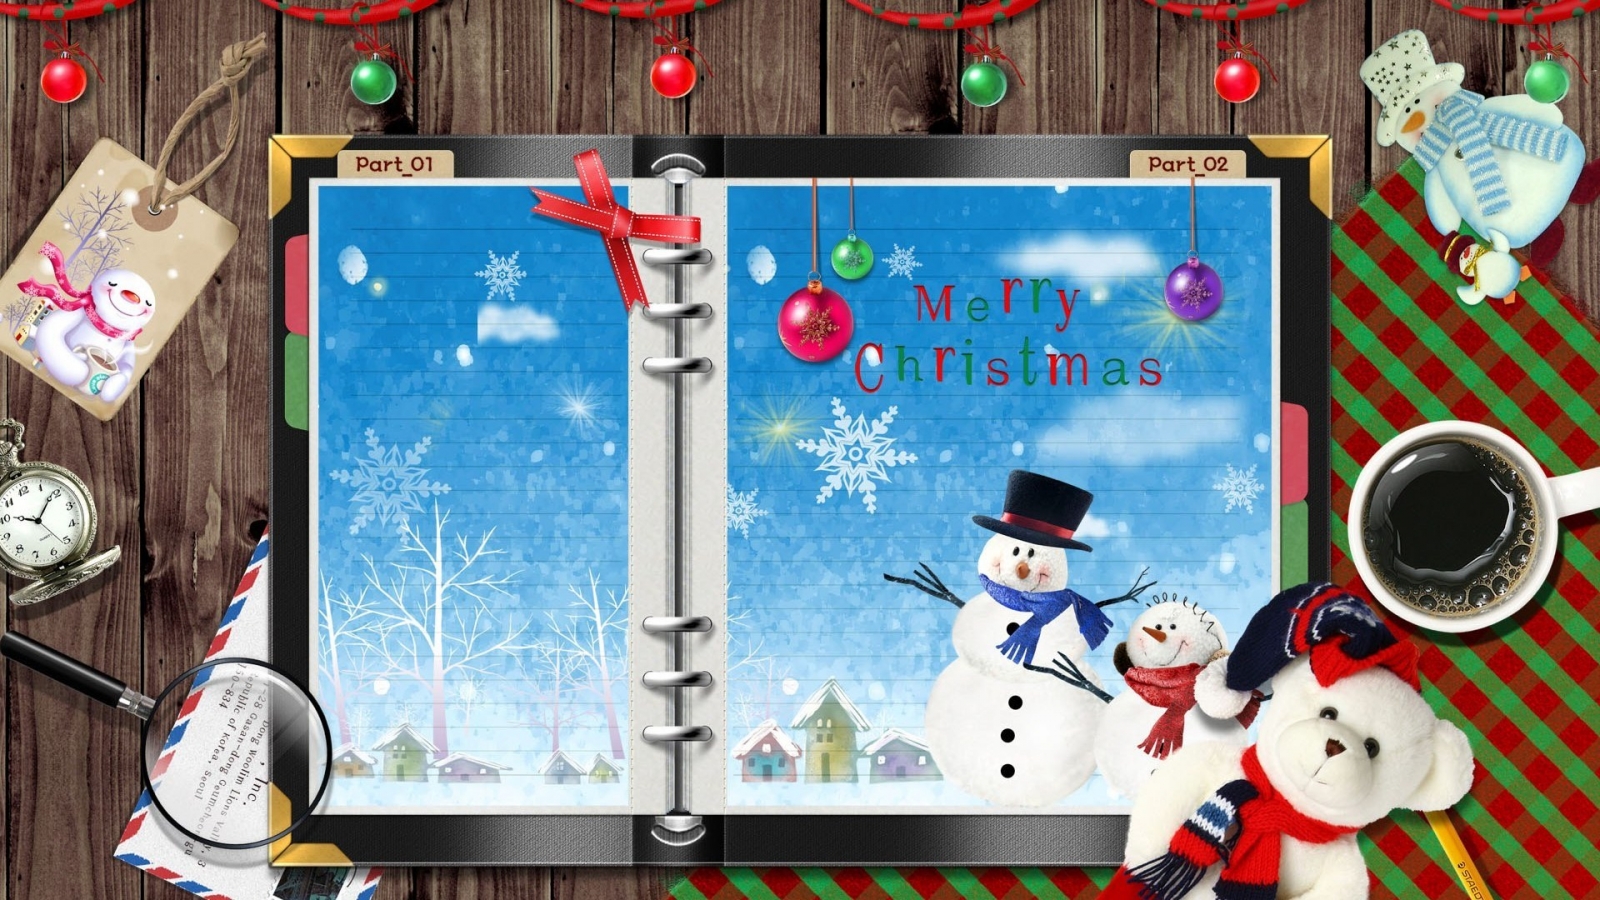 Snowman Christmas Card for 1600 x 900 HDTV resolution